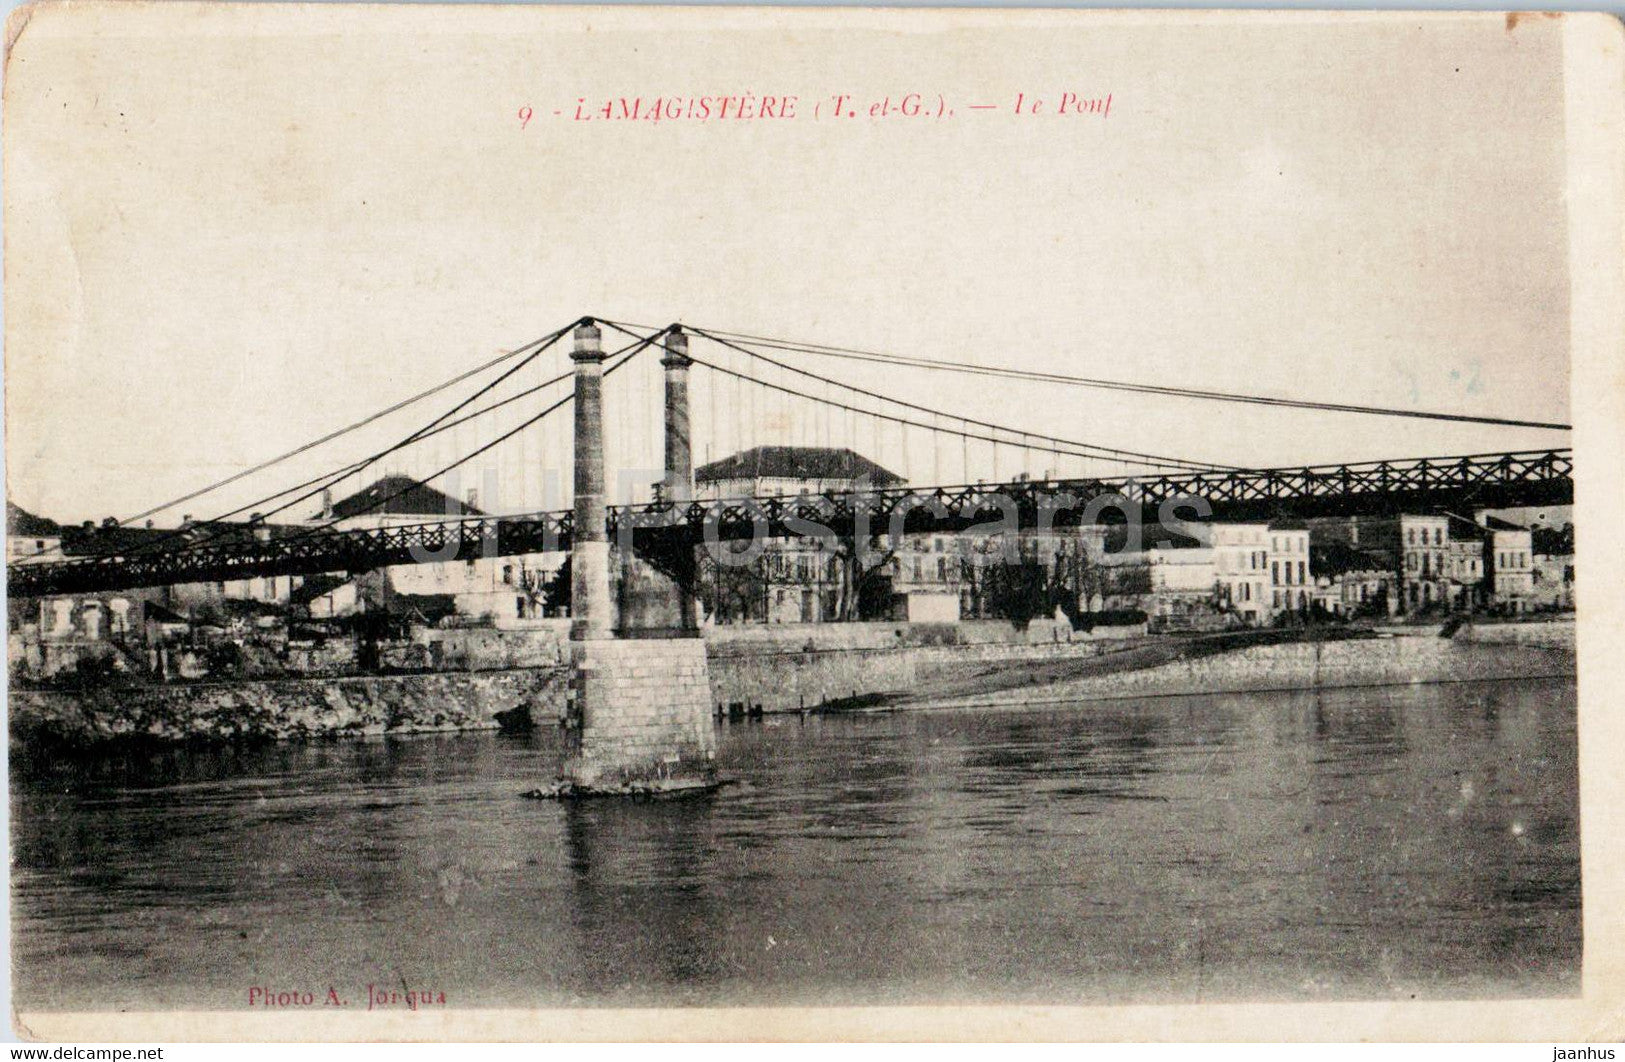 La Magistere - Le Pont - bridge - 9 - old postcard - France - unused - JH Postcards